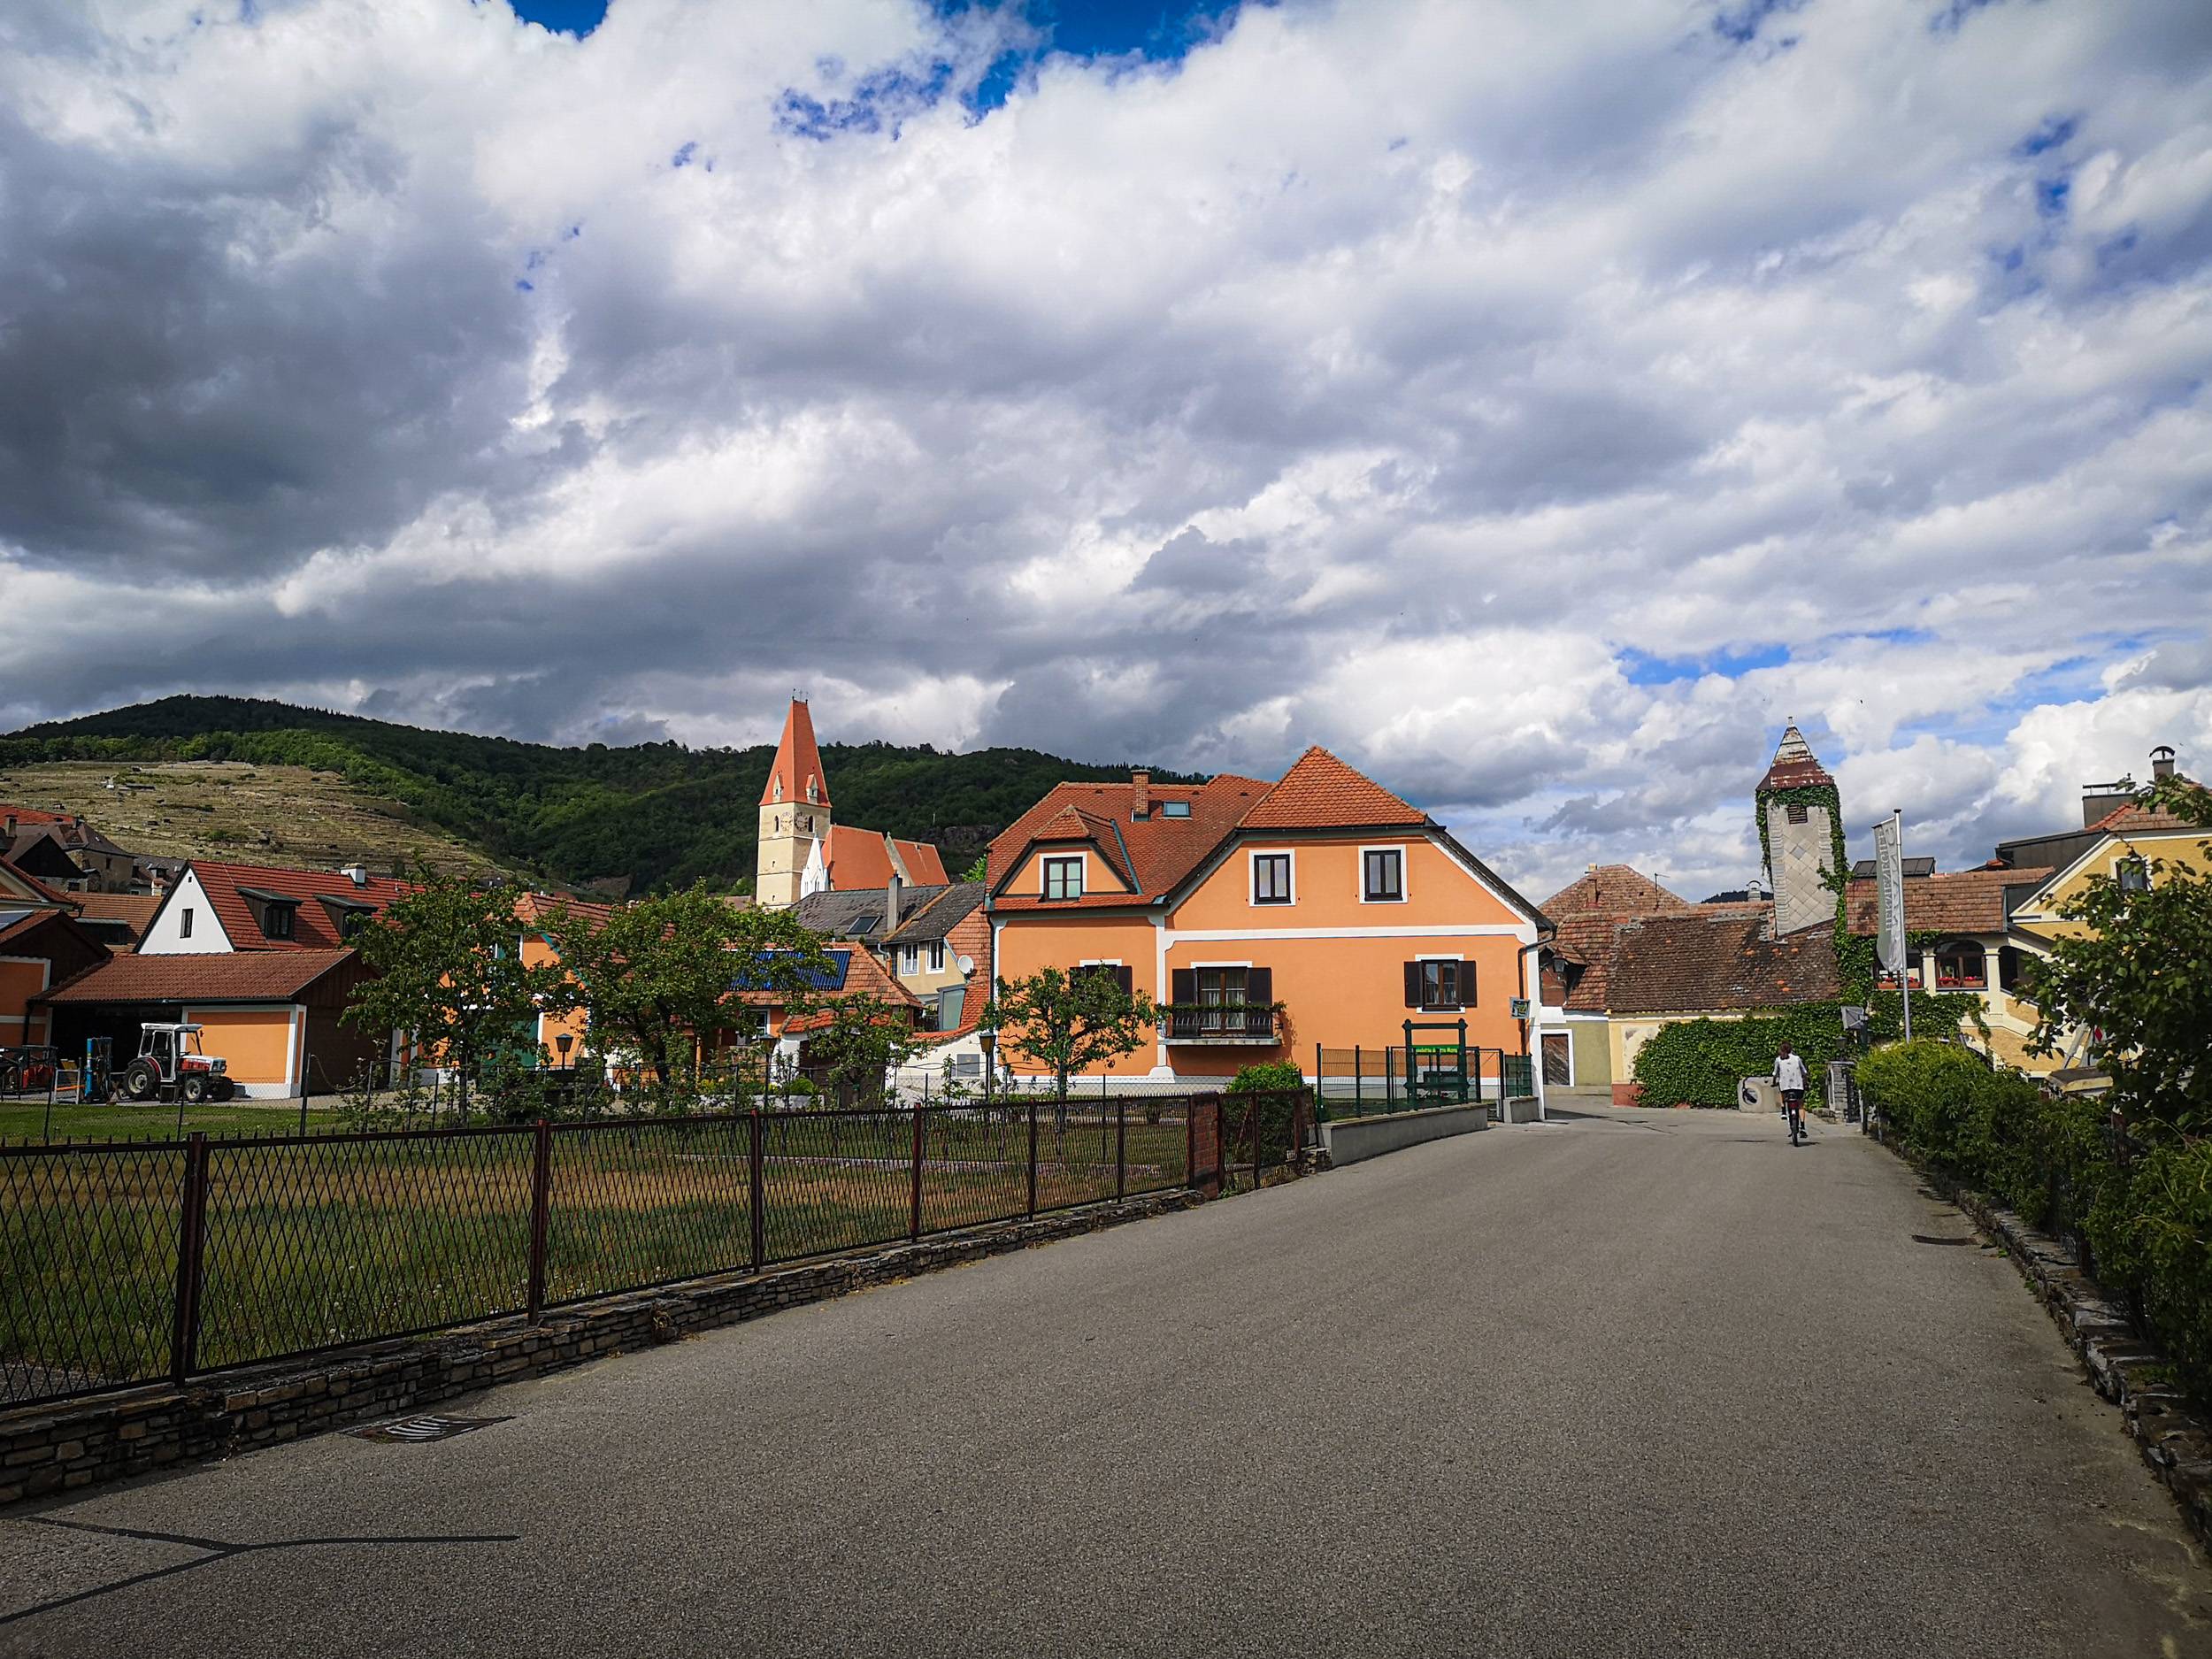 Joching & Weissenkirchen in Wachau, Austria